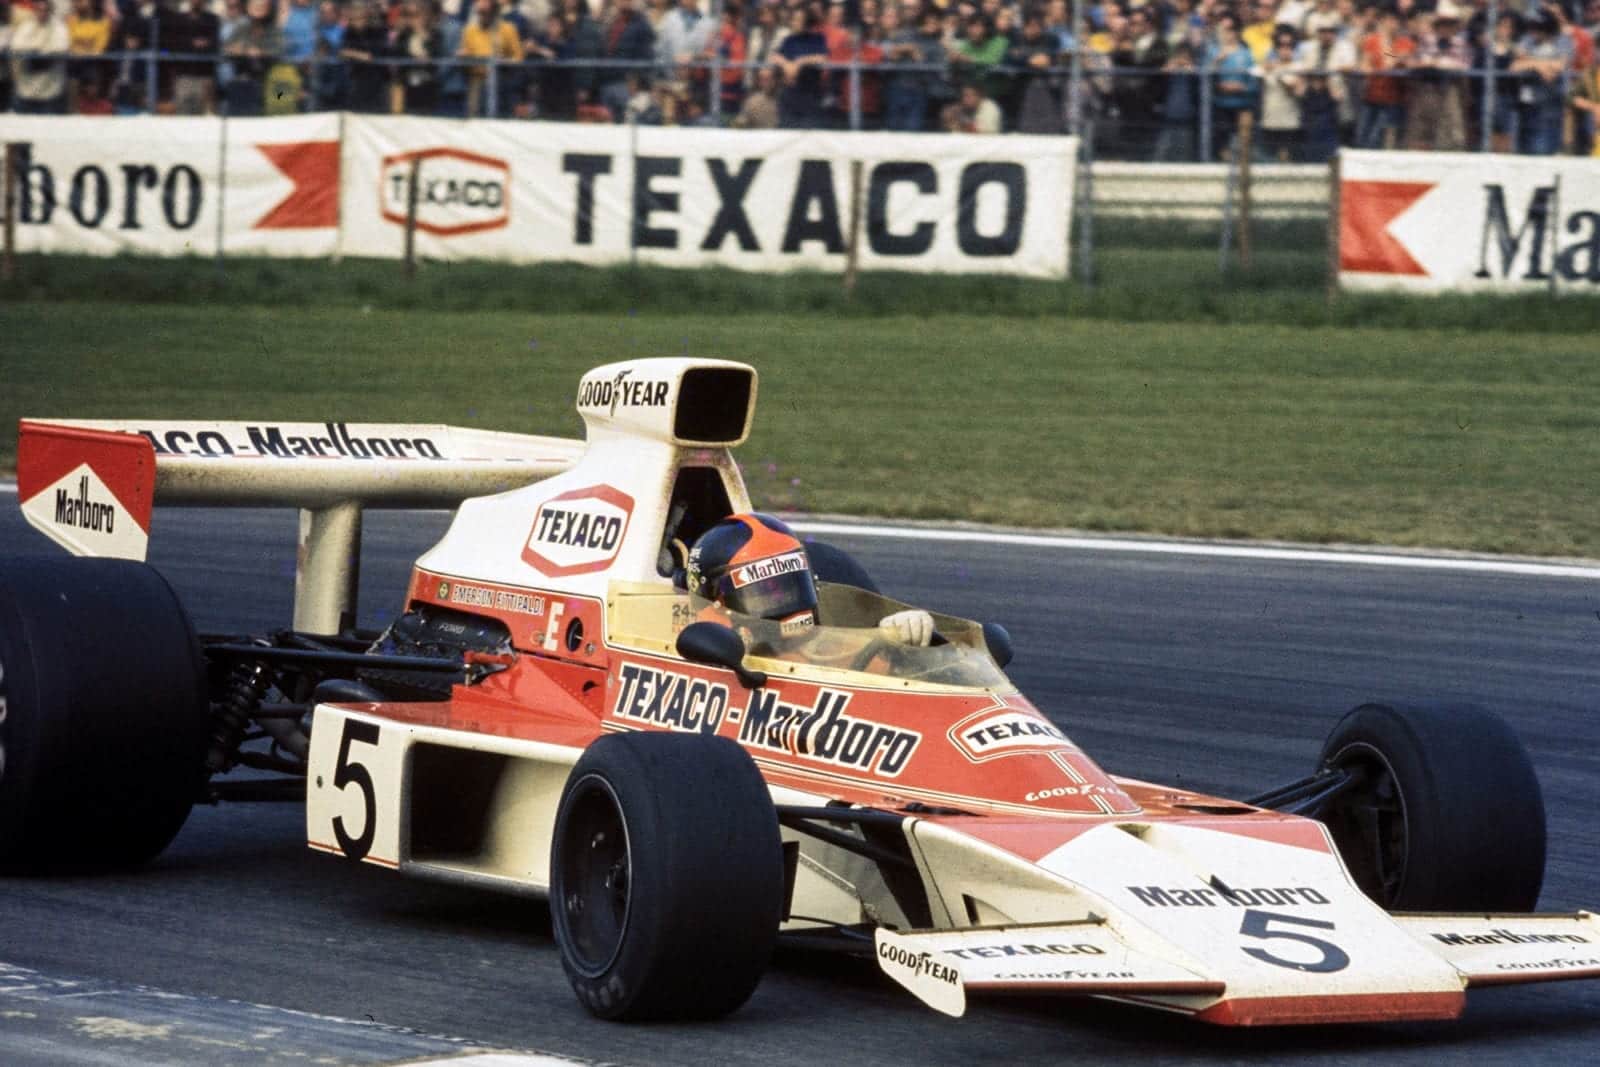 Emerson Fiitpaldi (McLAren) on his way to finishing first at the 1974 Belgian Grand Prix, Zolder.